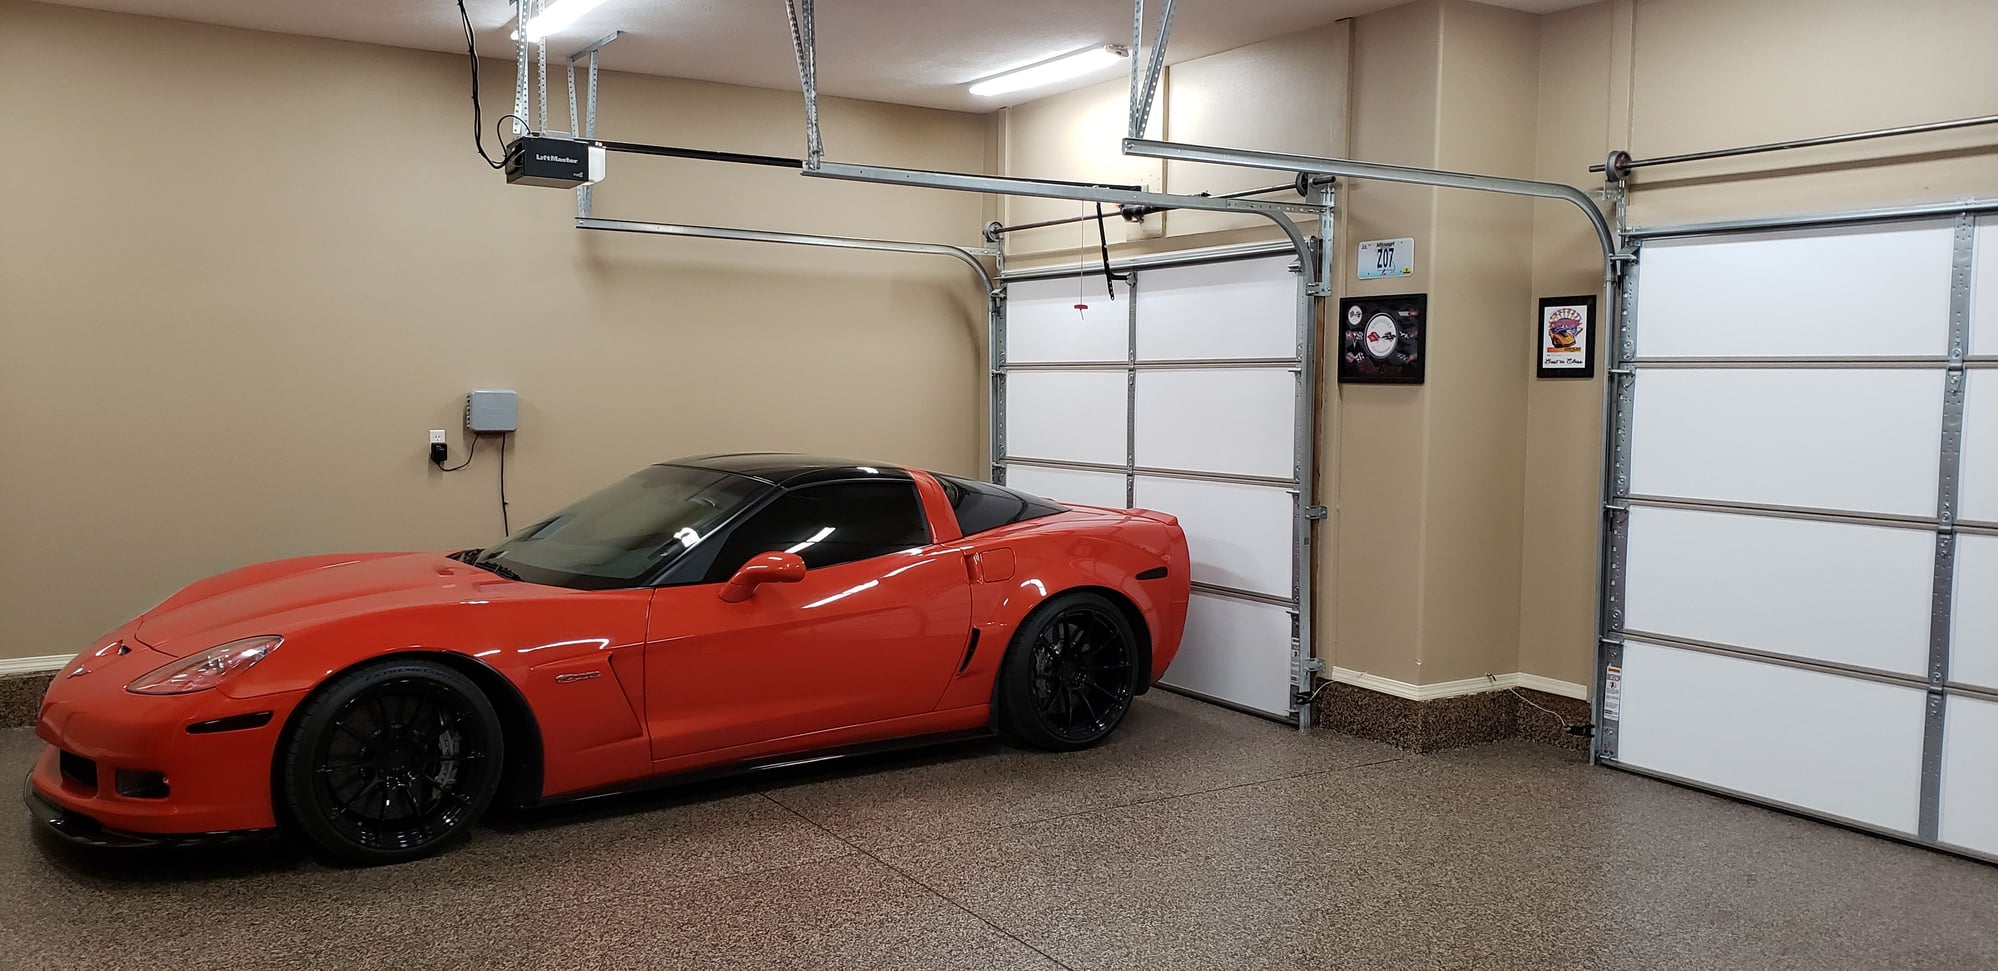 Garage DIY pressure washer station - CorvetteForum - Chevrolet Corvette  Forum Discussion